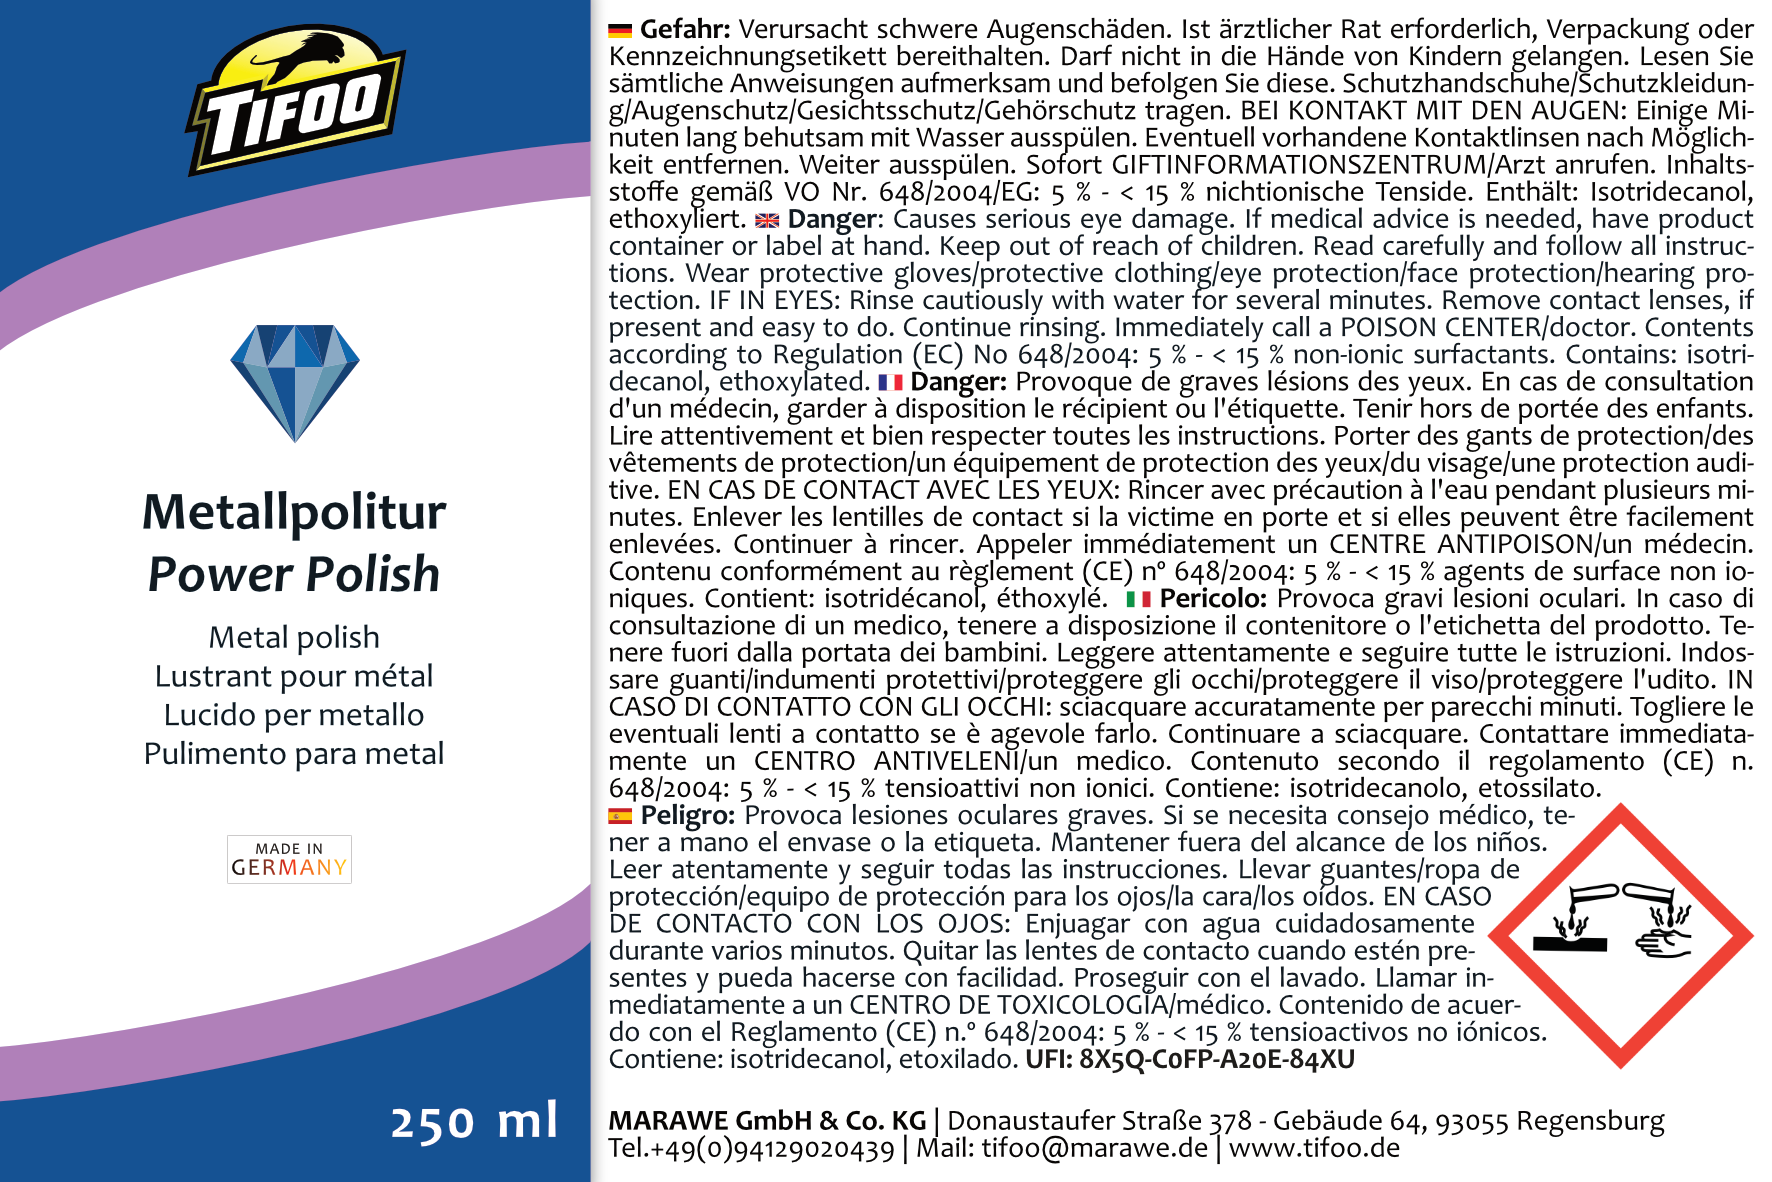 Etikett Metallpolitur Power Polish